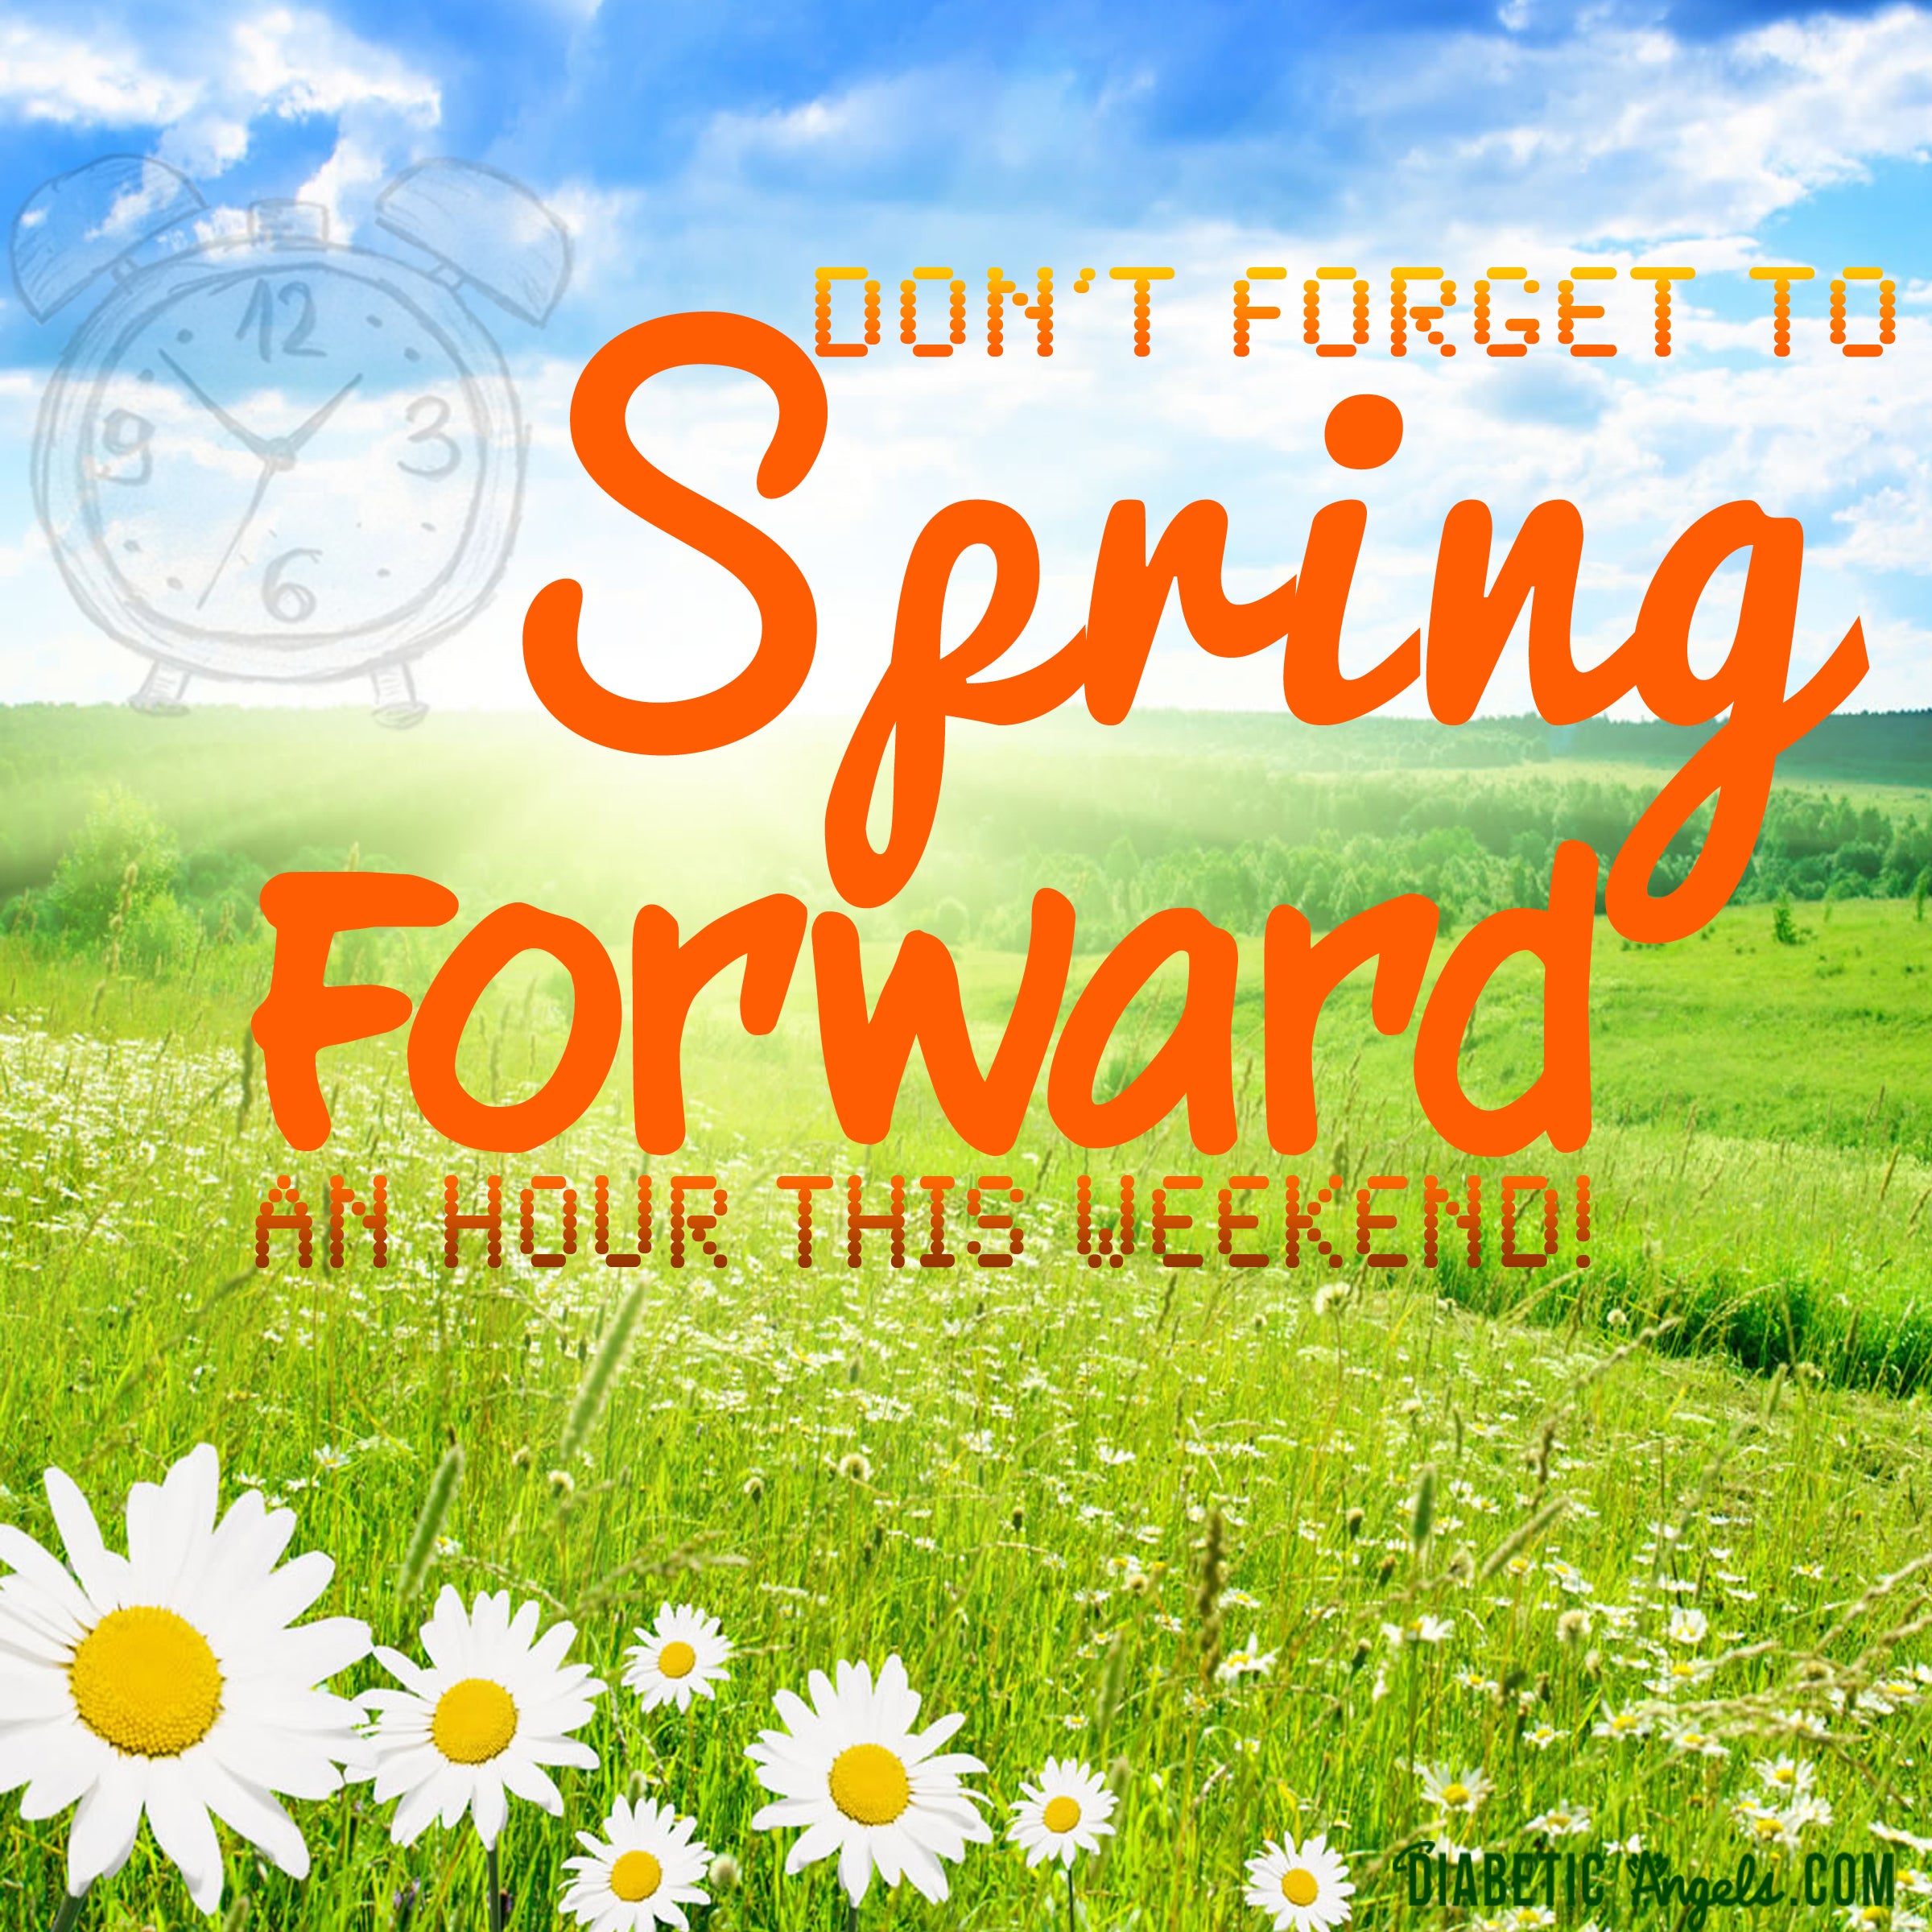 Spring Forward this weekend!